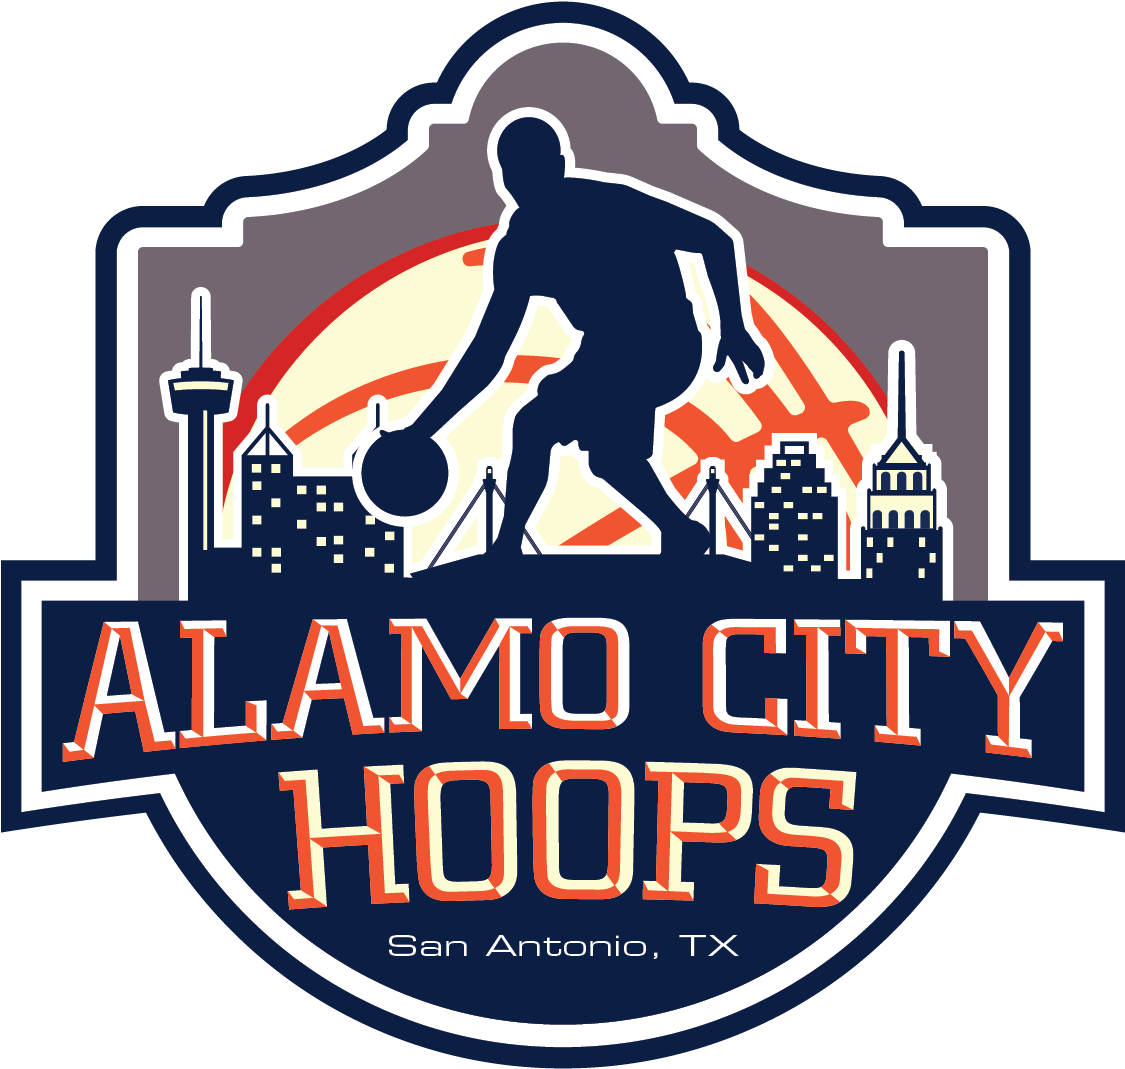 Alamo City Hoops - Alamo City Hoops (1200x1200)